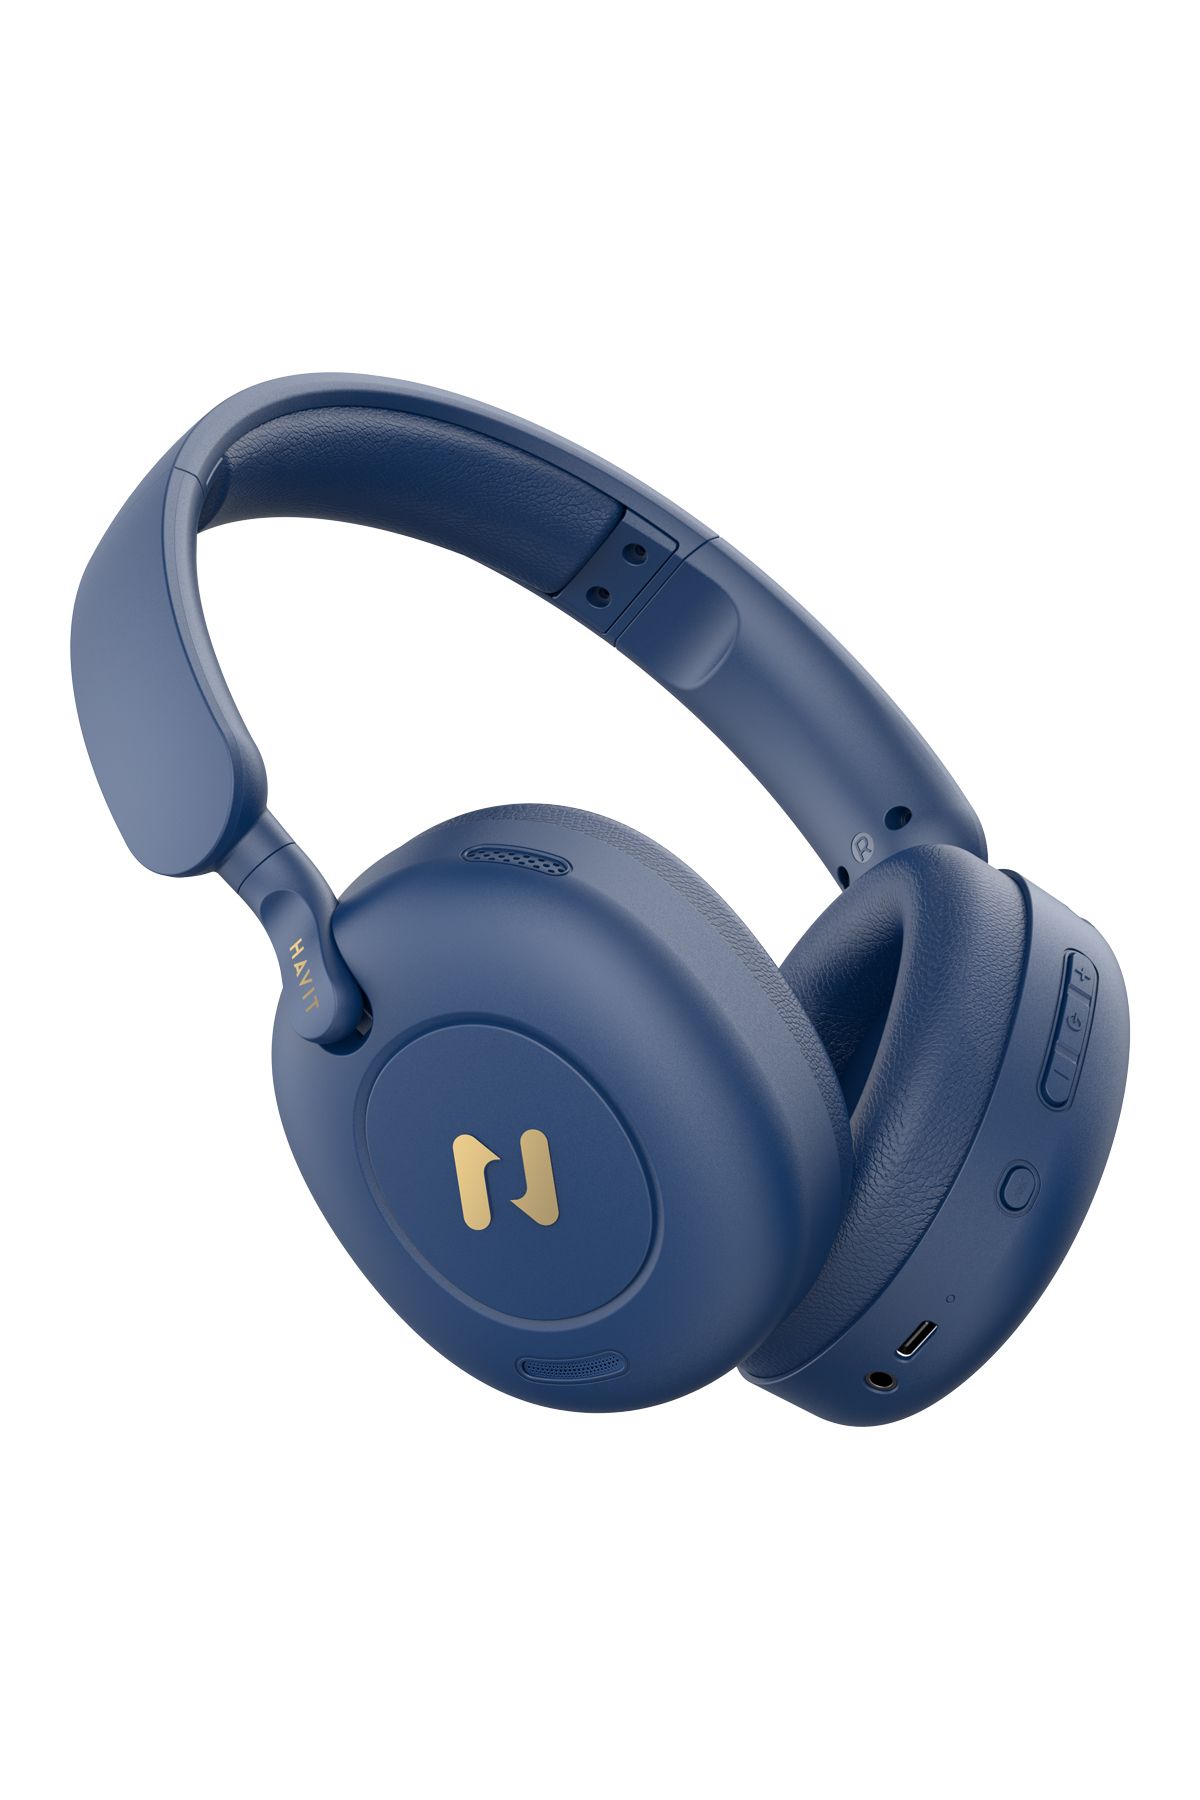 Havit H655BT PRO Hi-Res ANC Kulaküstü Bluetooth Kulaklık - 80 Saat Batarya, AI Gürültü Önleme